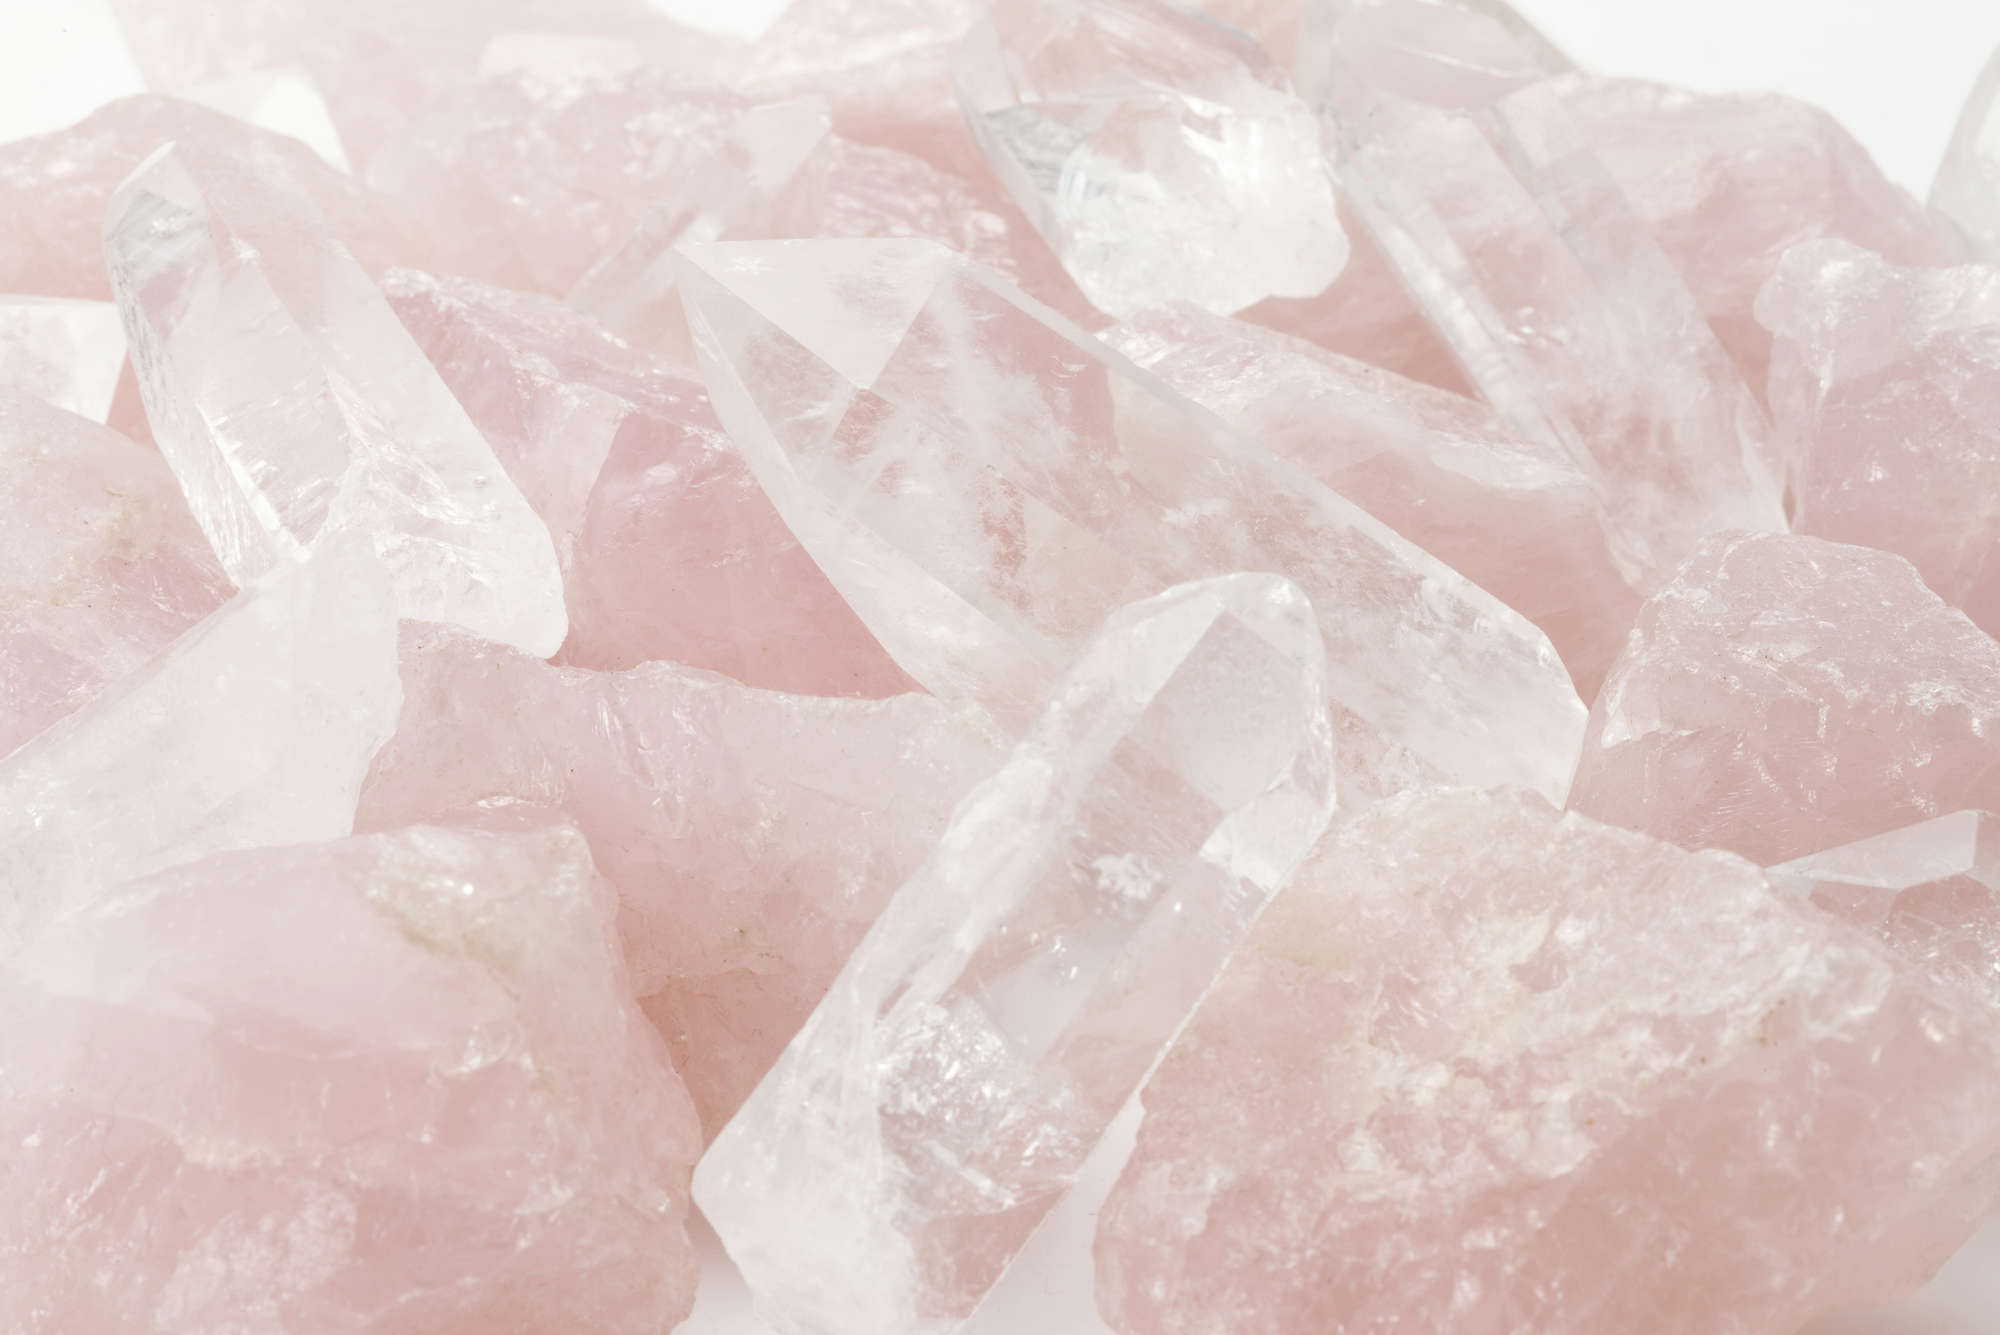             Fototapete Quarz Kristalle in Rose – Mattes Glattvlies
        